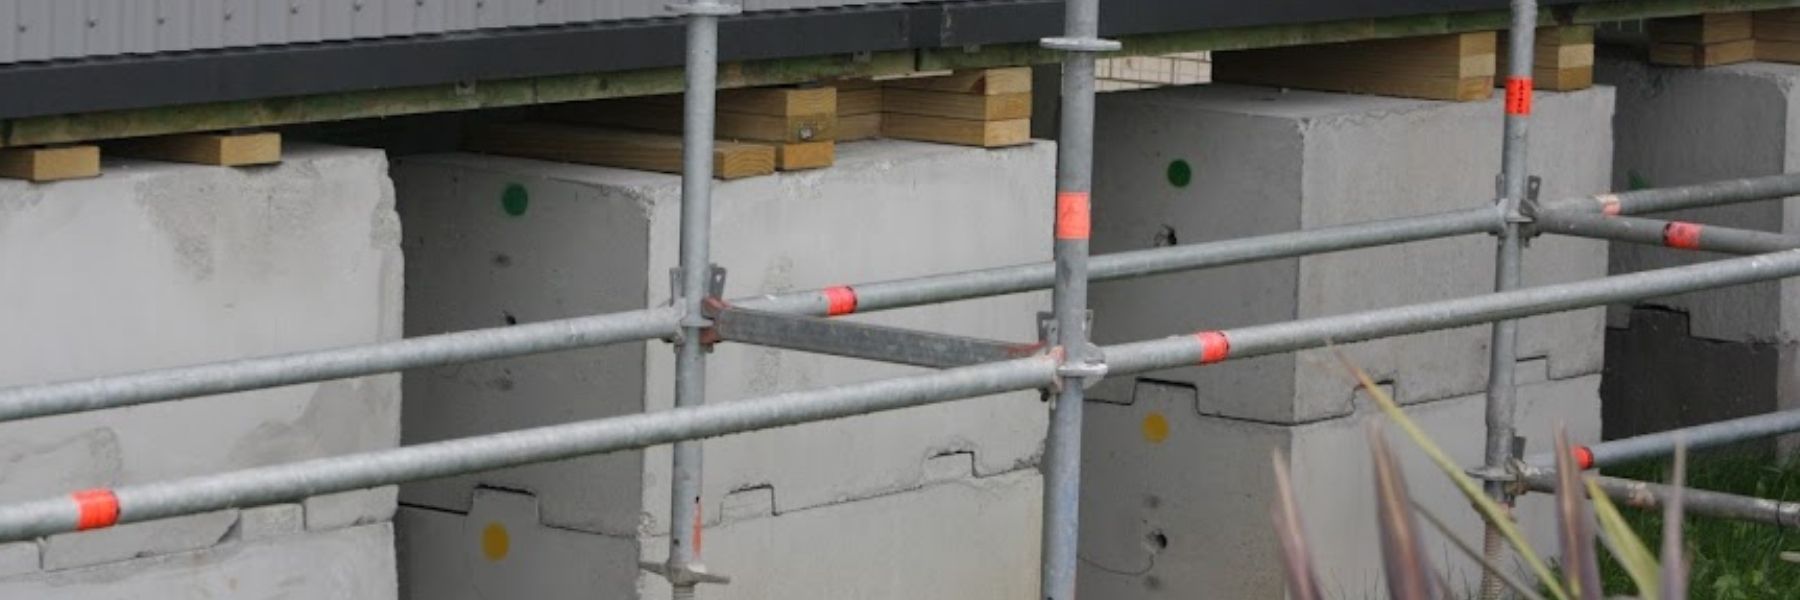 Interbloc concrete blocks used for temporary foundations